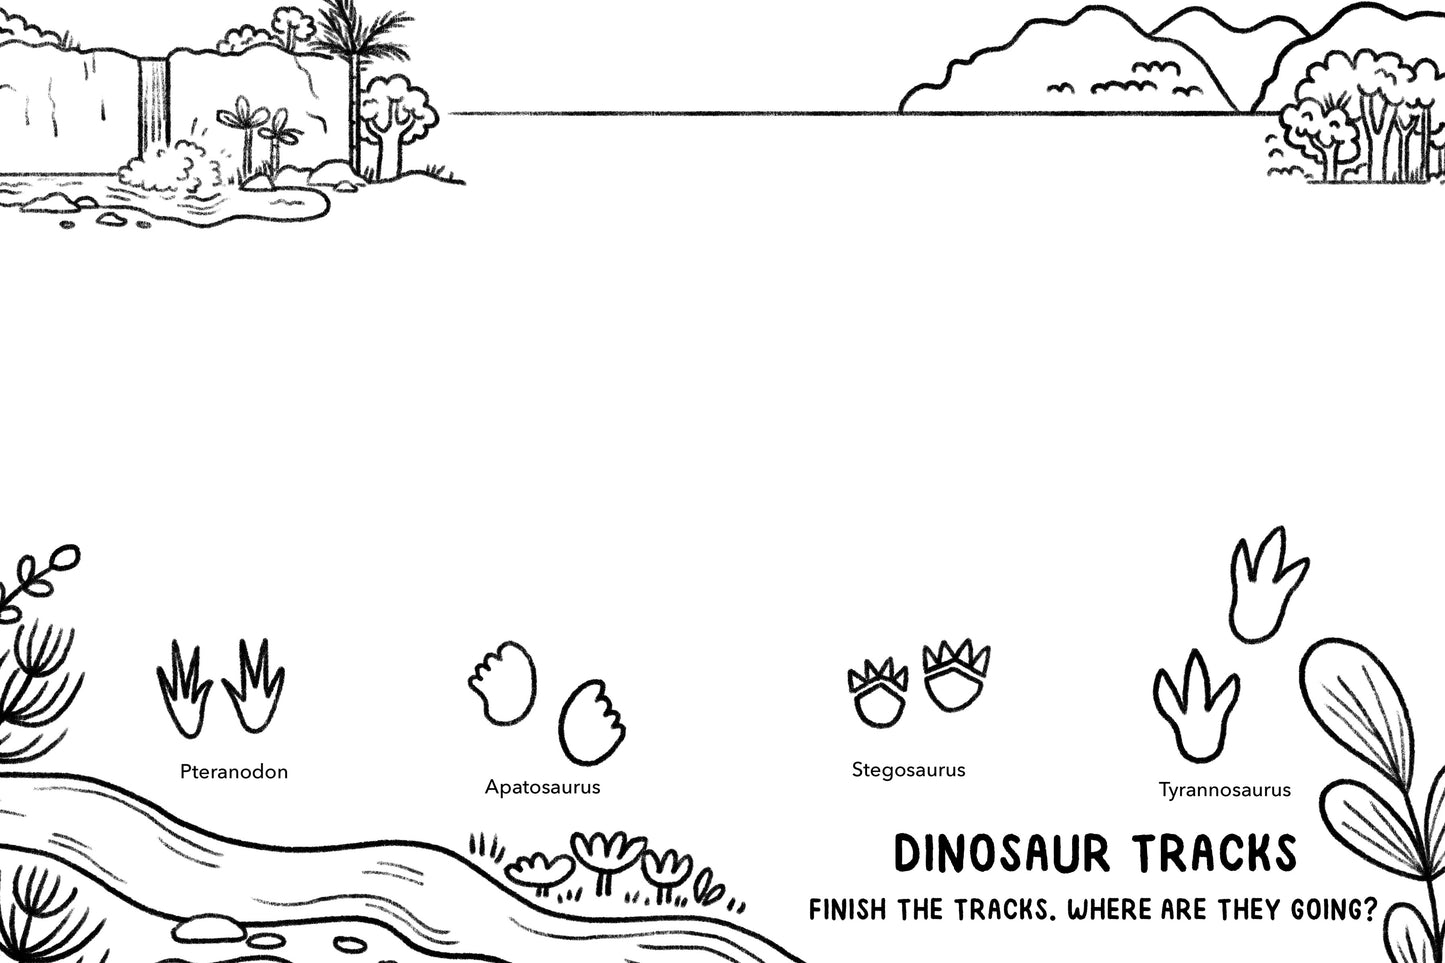 Mini Doodles: Let's Draw Dinosaurs